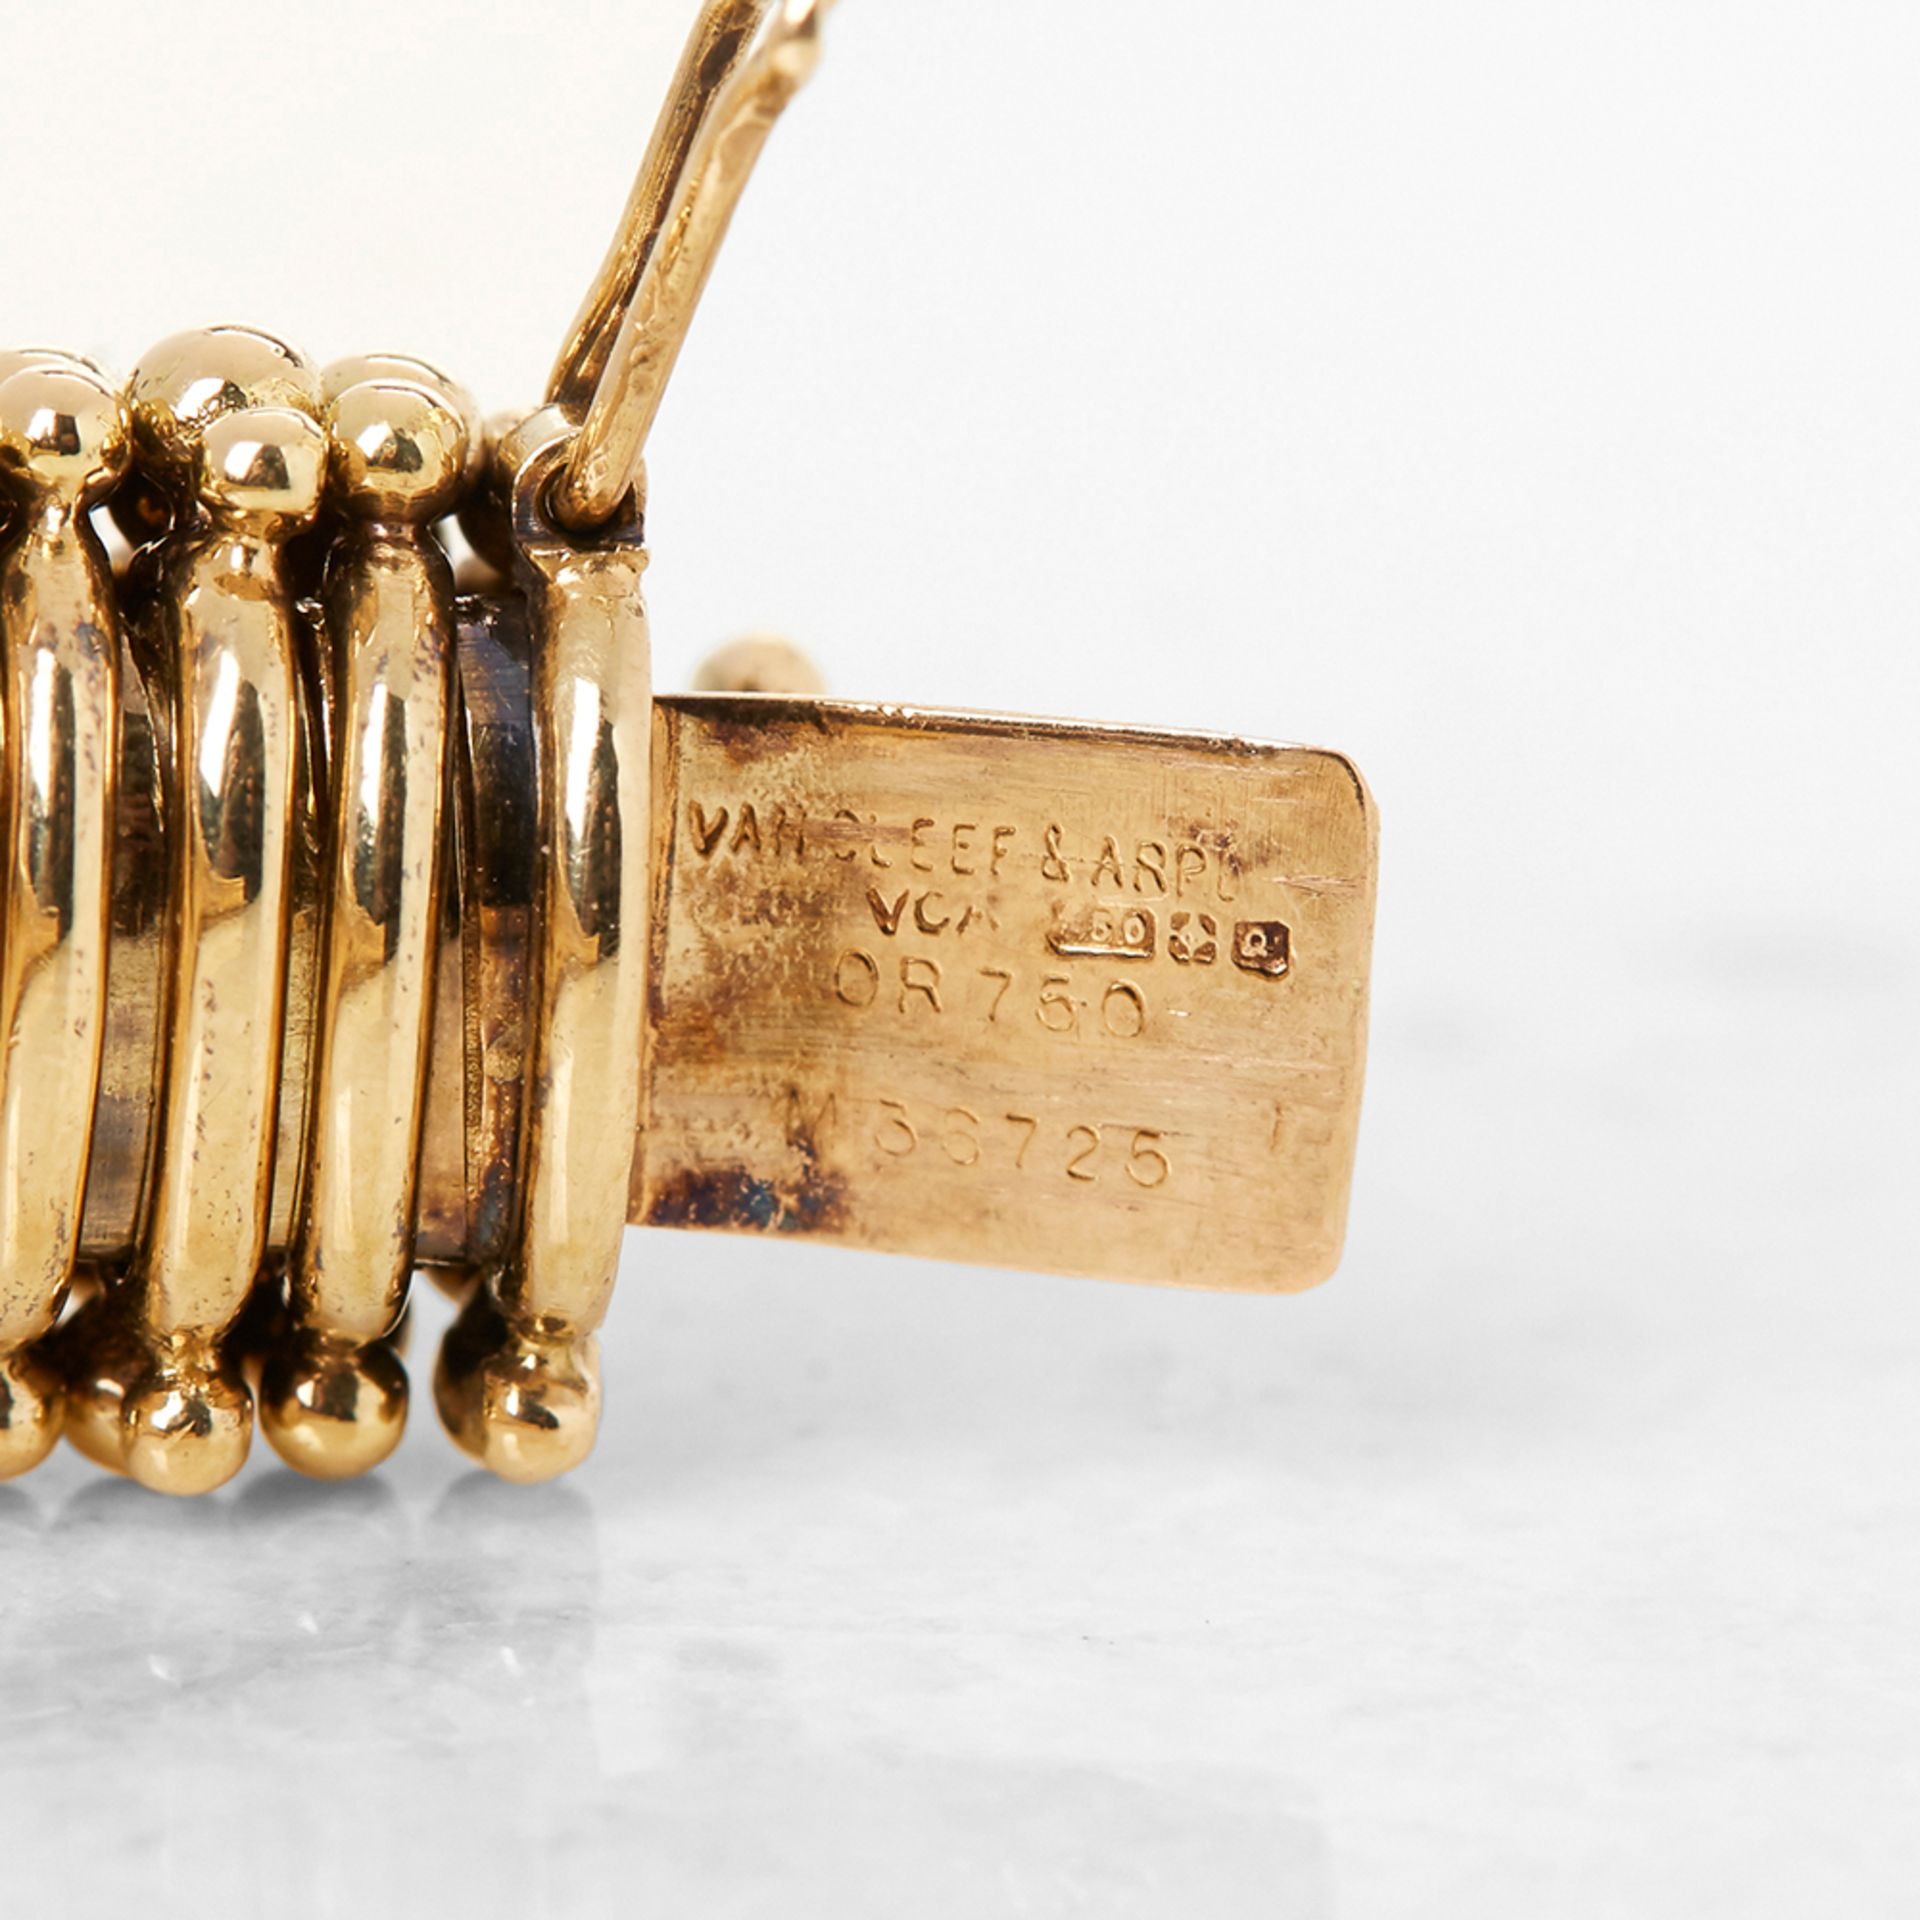 Van Cleef & Arpels 18k Yellow Gold Ruby & Diamond Vintage Bracelet with Presentation Box - Image 10 of 16